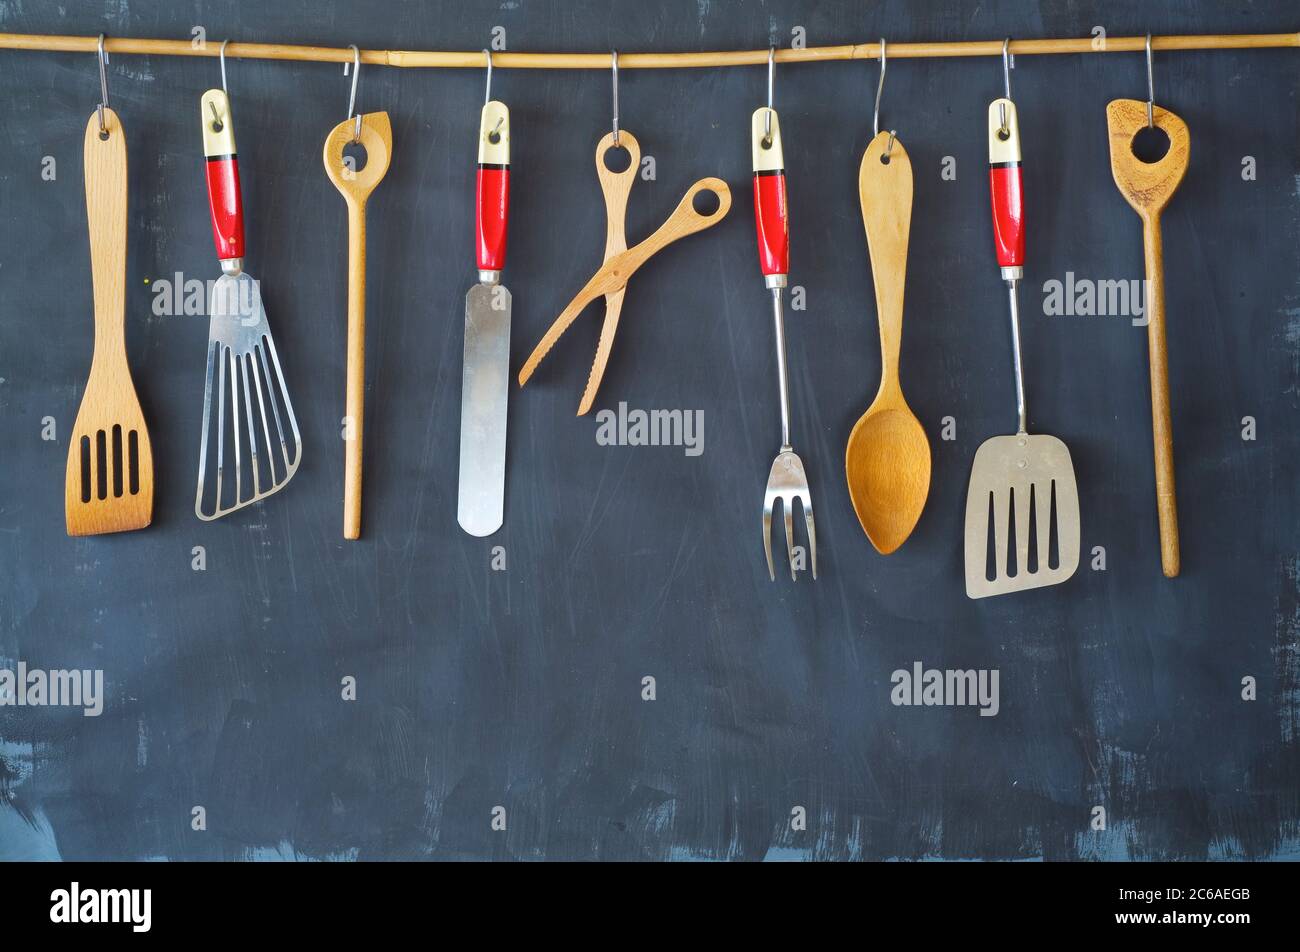 https://c8.alamy.com/comp/2C6AEGB/kitchen-utensils-for-commercial-kitchen-restaurant-cooking-kitchen-concept-2C6AEGB.jpg